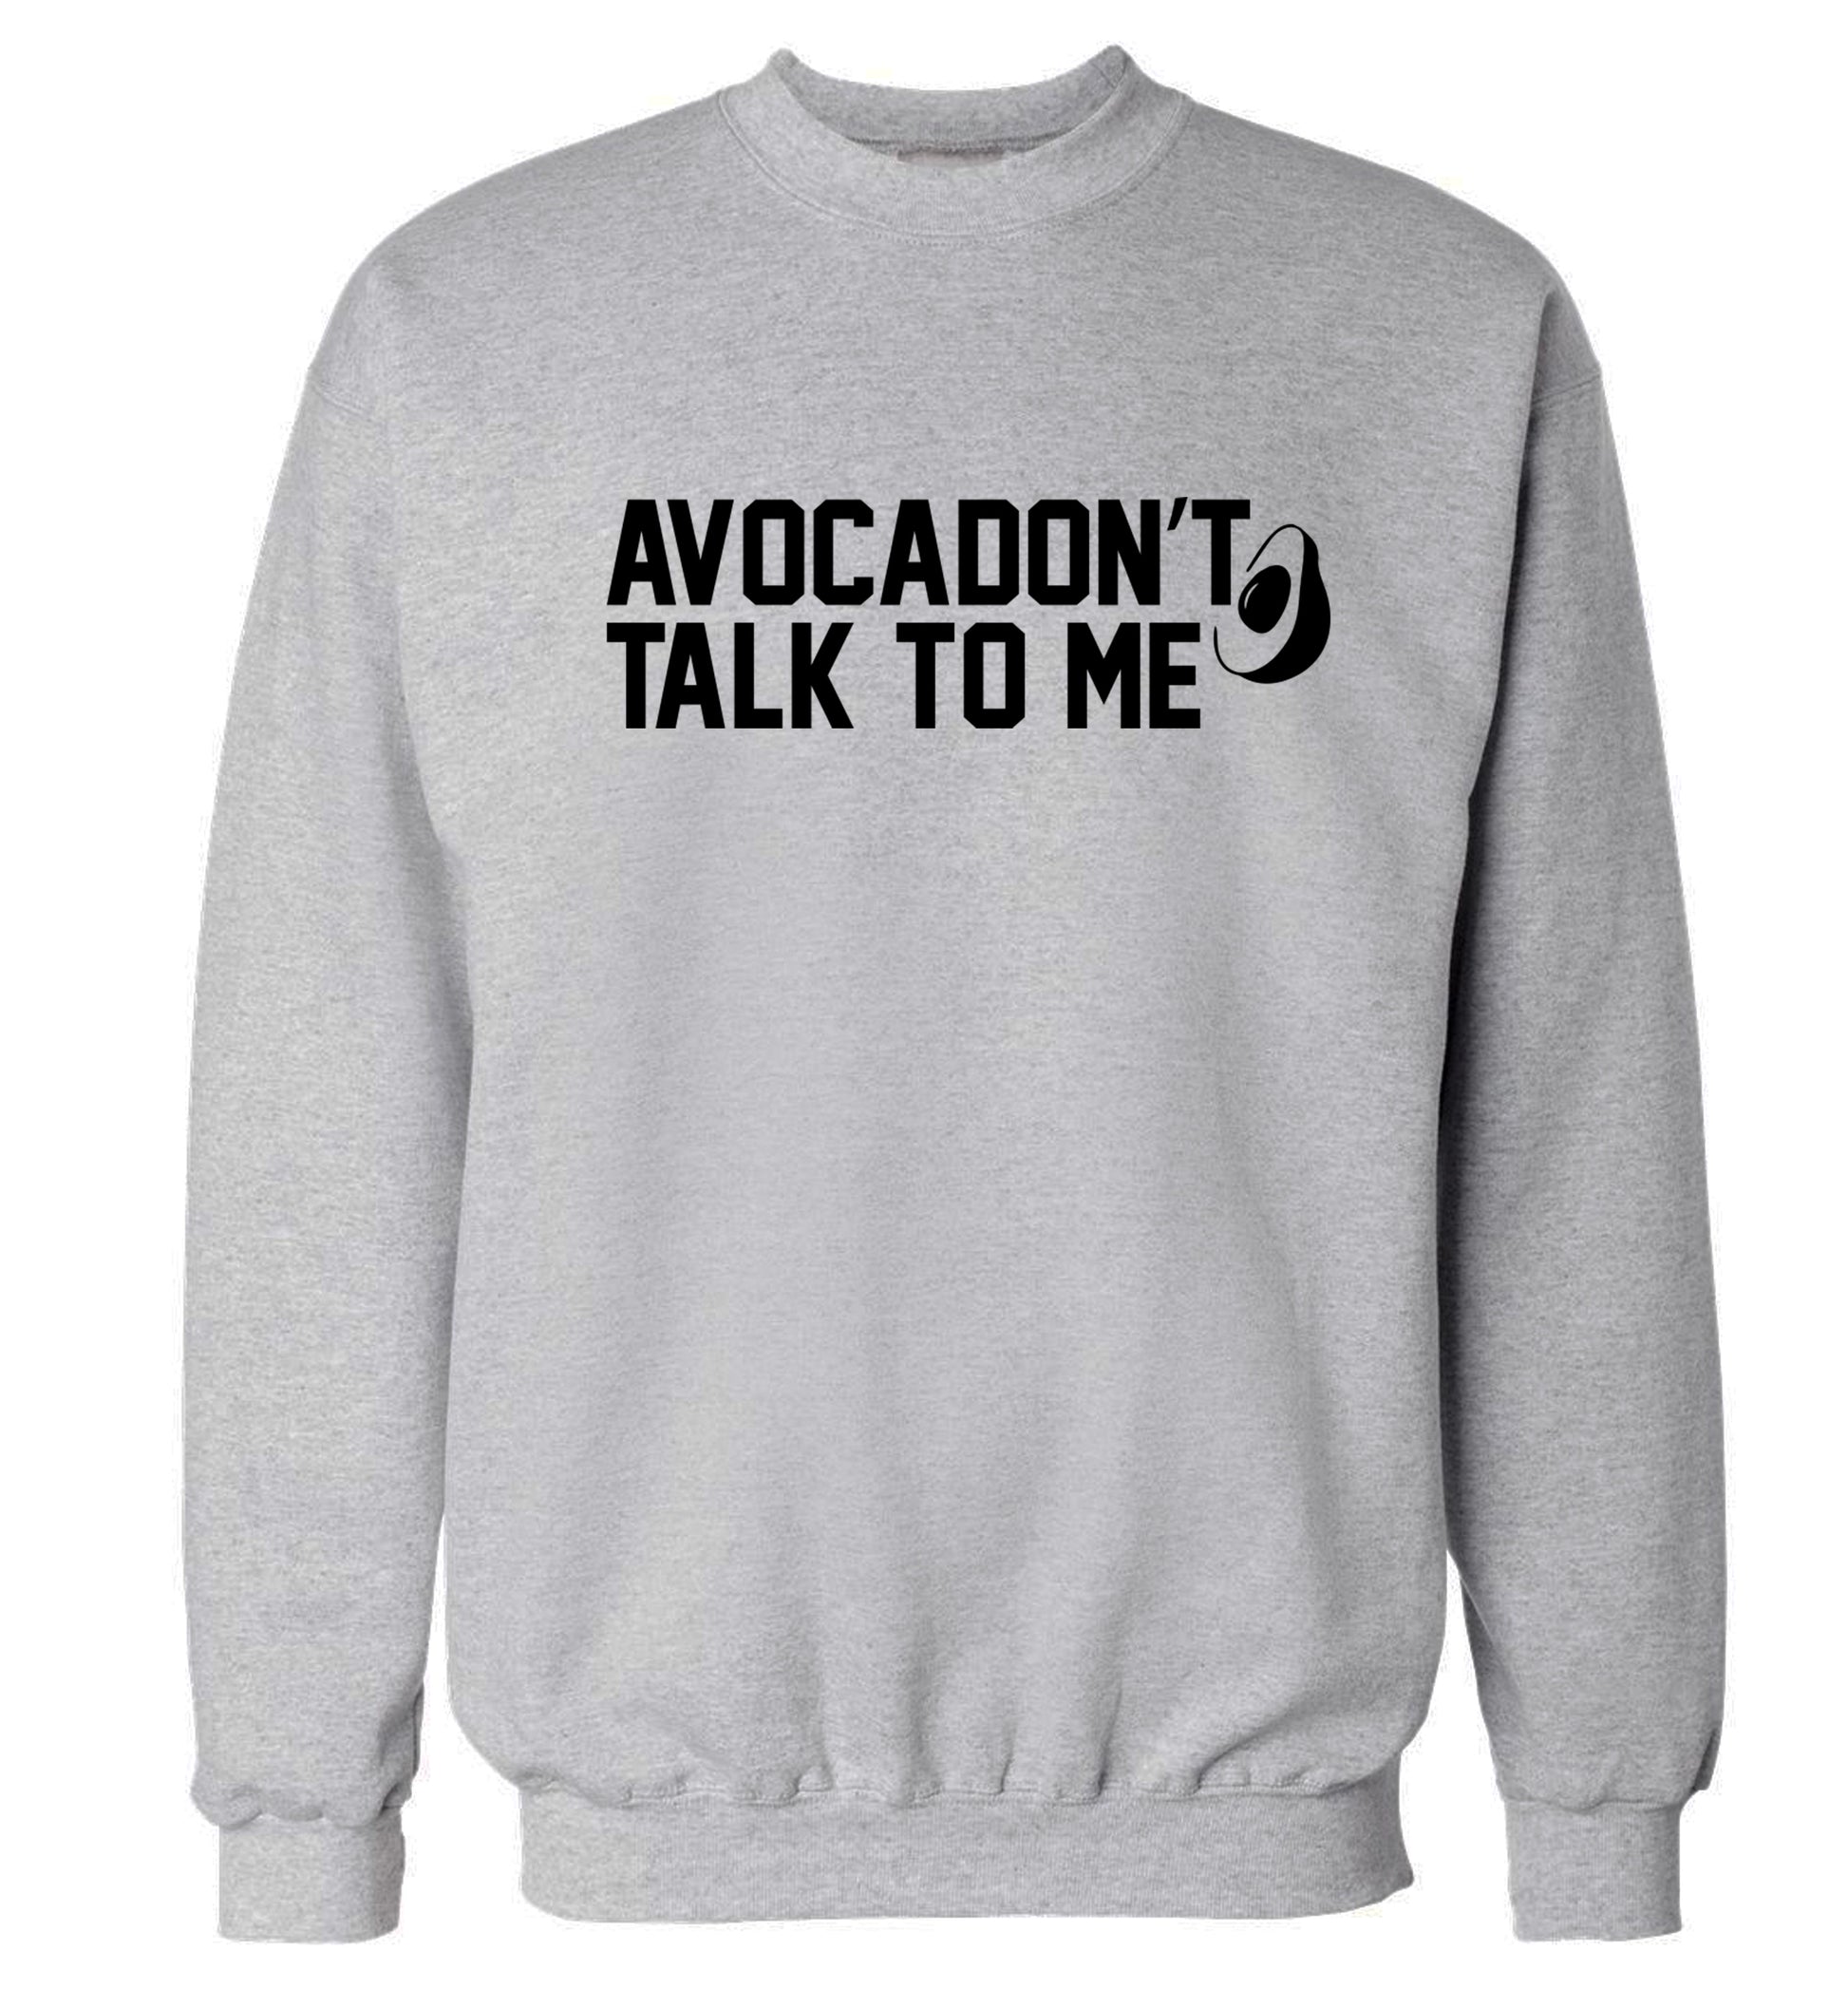 Avocadon't talk to me Adult's unisex grey Sweater 2XL